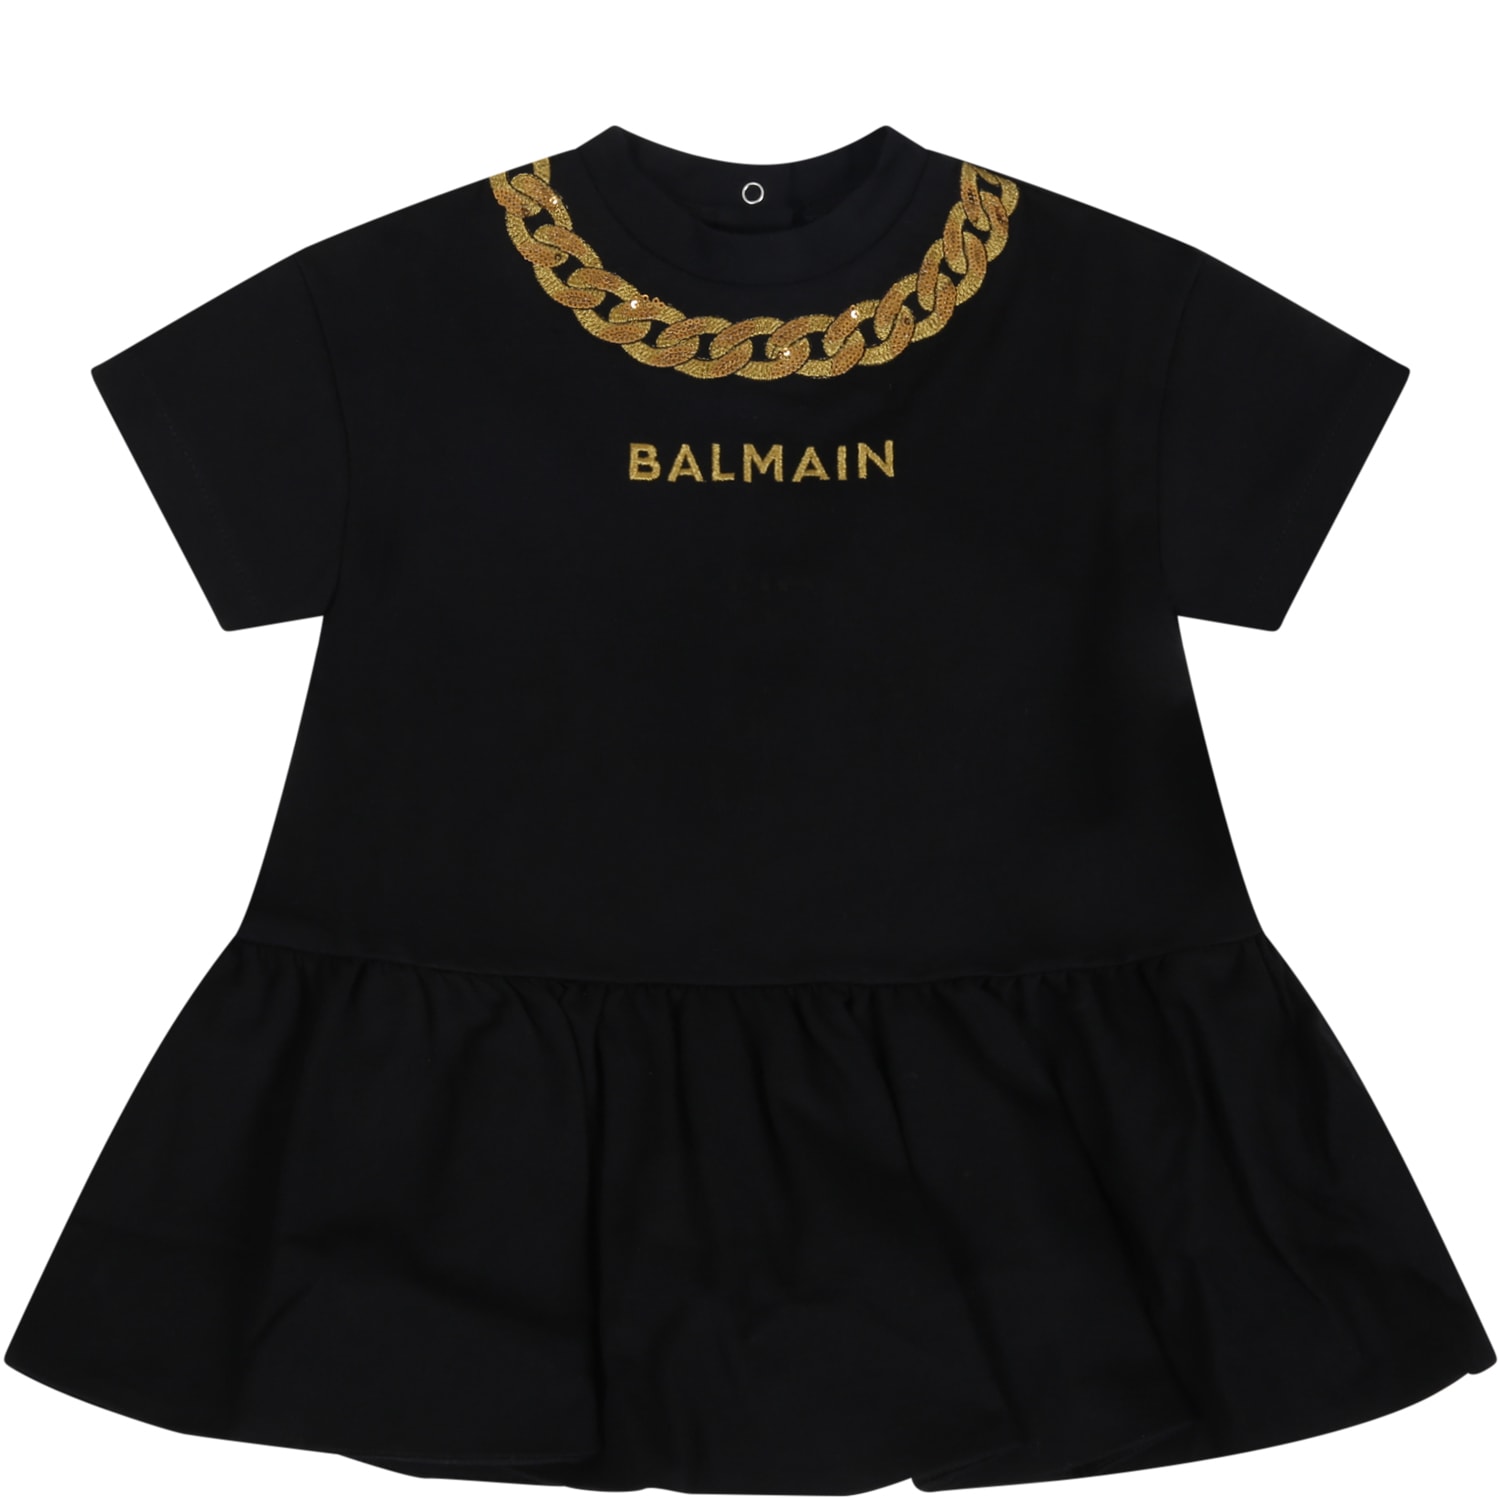 Balmain Black Dress For Babygirl With Logo